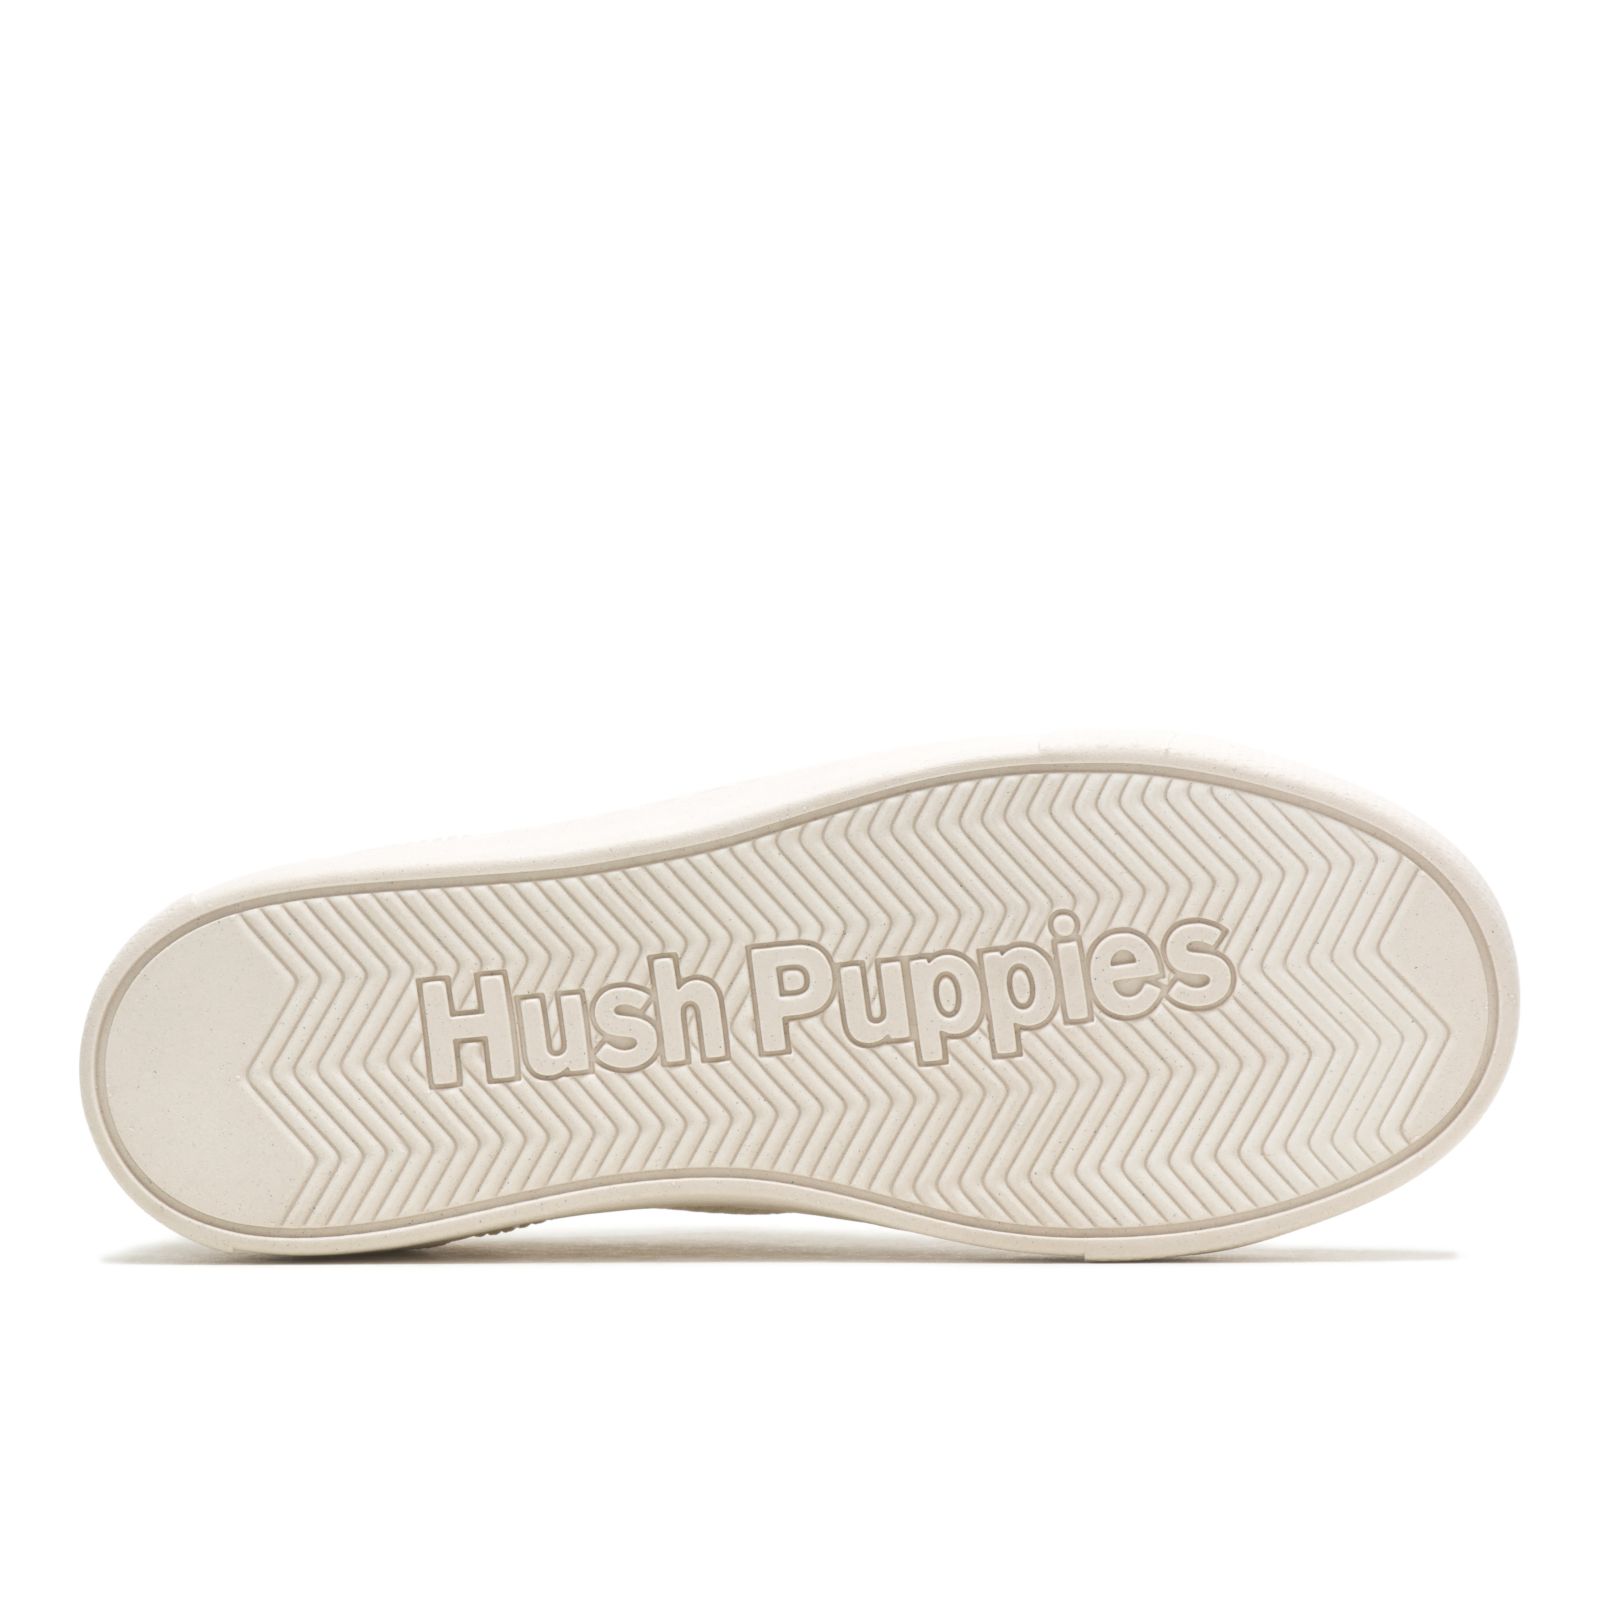 Tenis Hush Puppies The Good Low Top Hombre Grises | PHGMIFZ-19